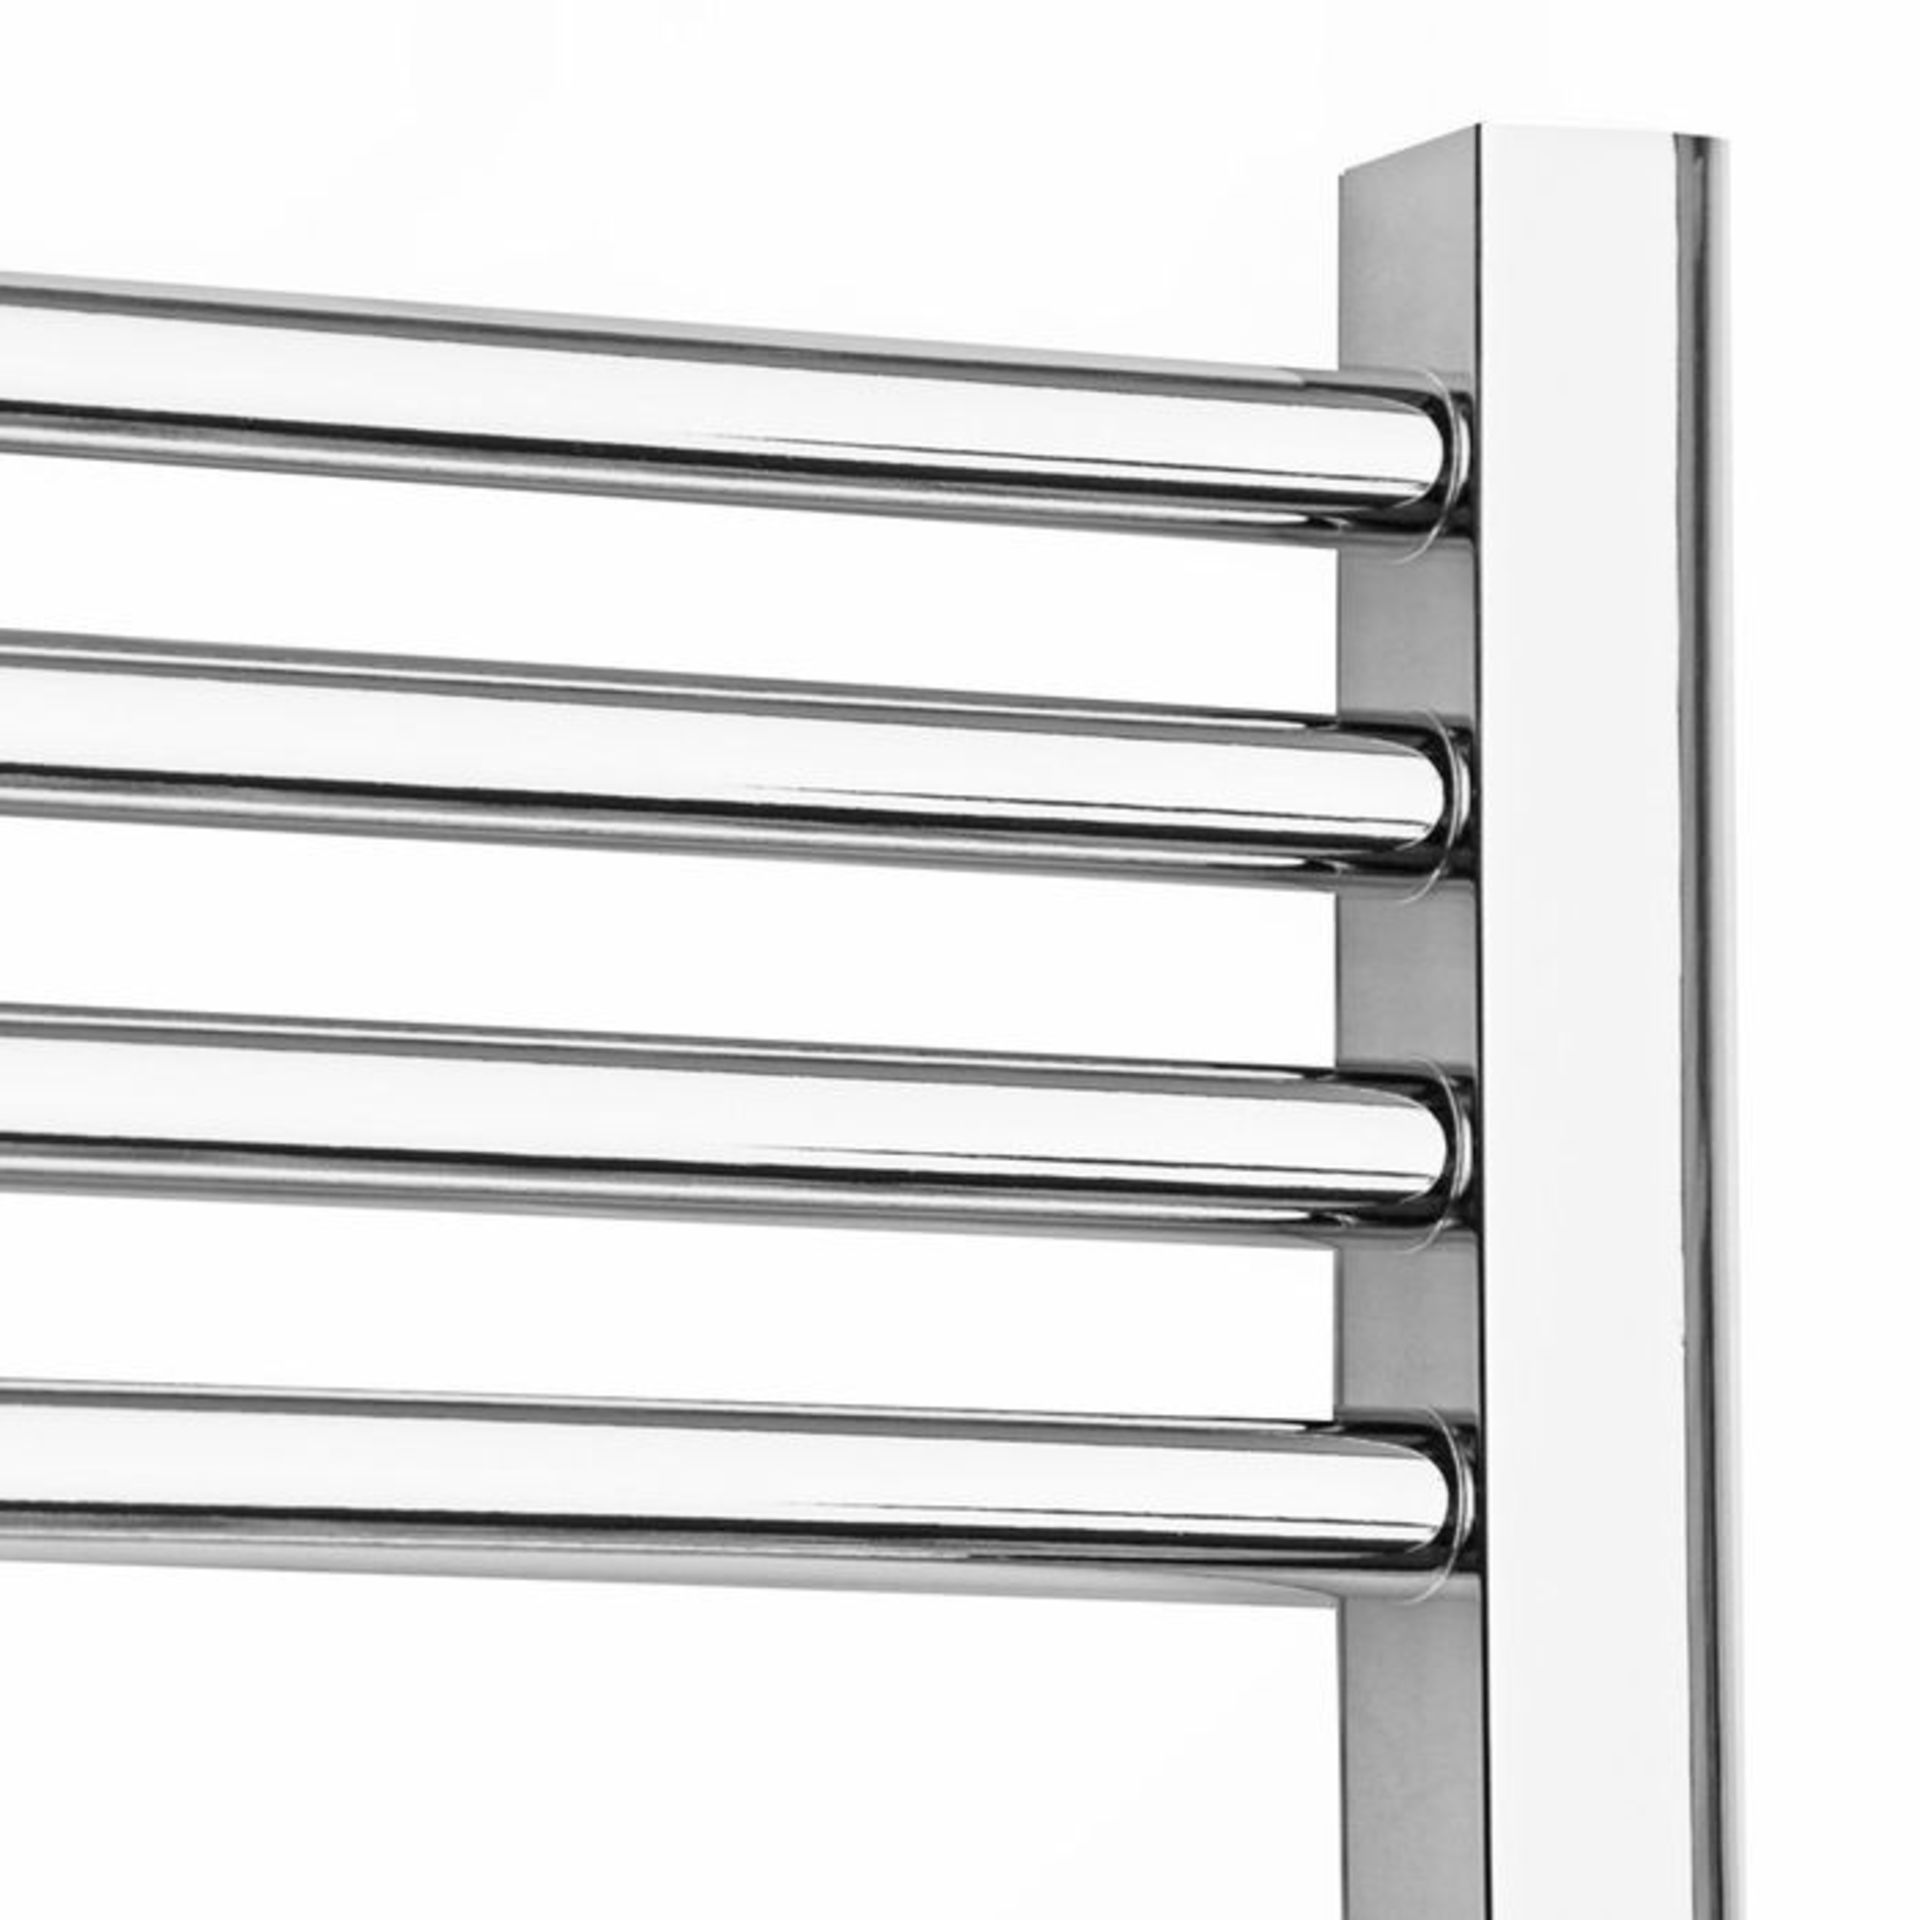 (AA7) 1600x450mm - 25mm Tubes - Chrome Heated Straight Rail Ladder Towel Radiator. This premium - Image 4 of 4